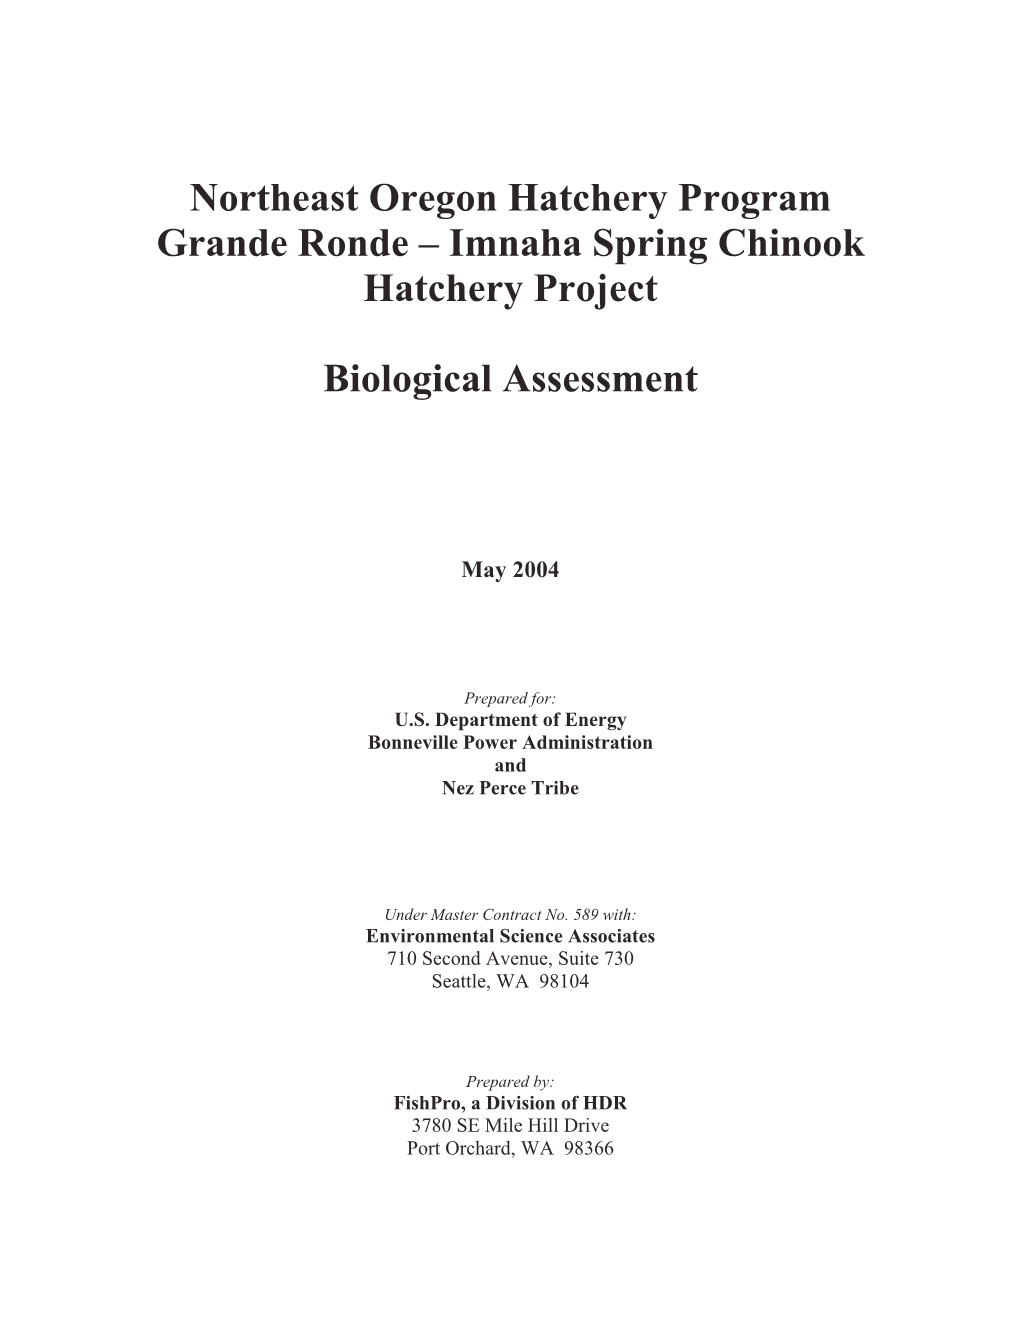 Northeast Oregon Hatchery Program Grande Ronde – Imnaha Spring Chinook Hatchery Project